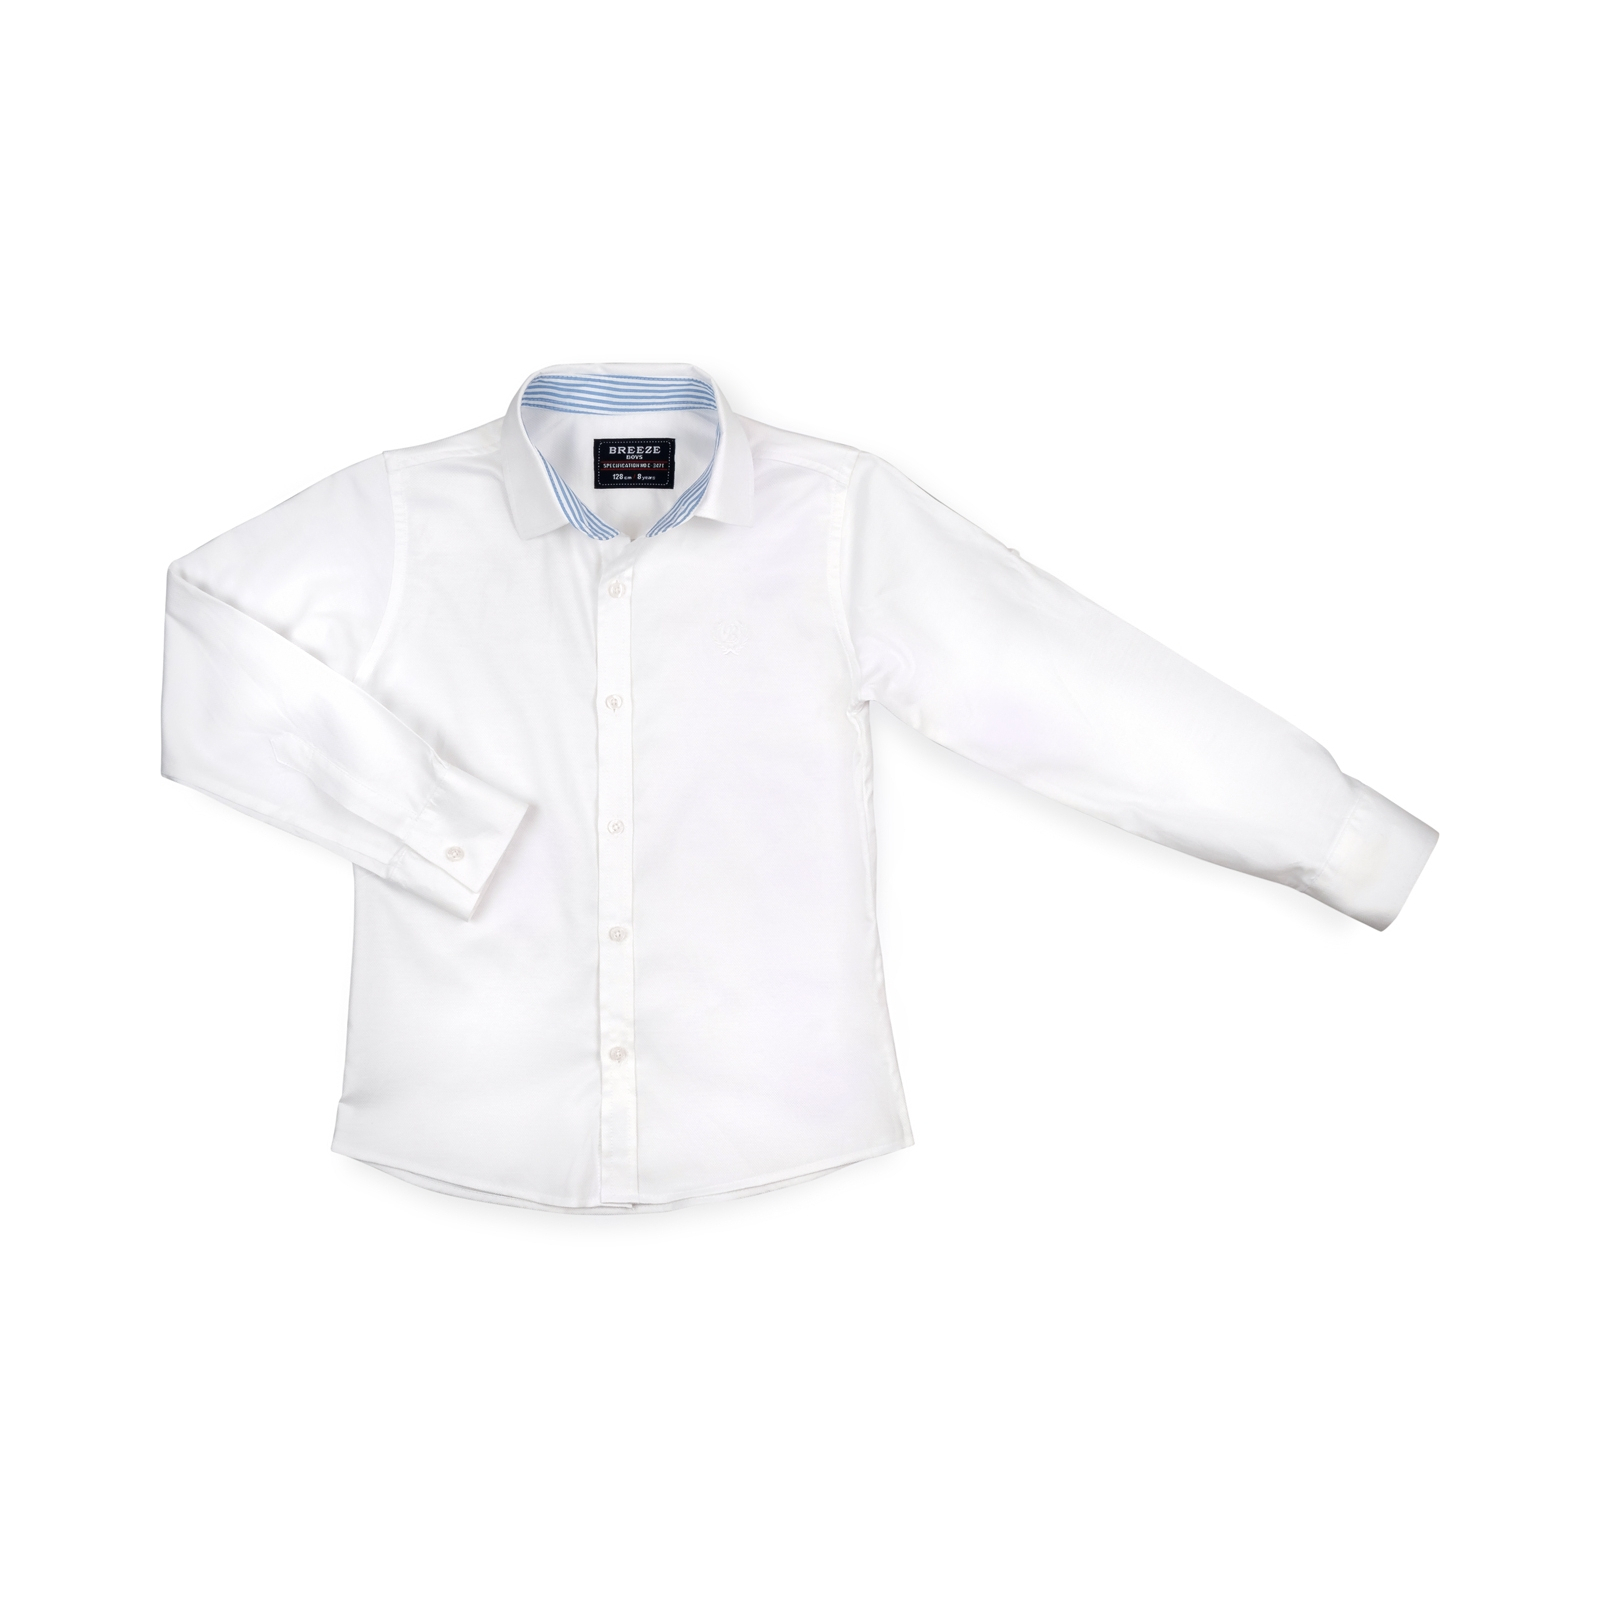 Рубашка Breeze для школы (G-326-152B-white)